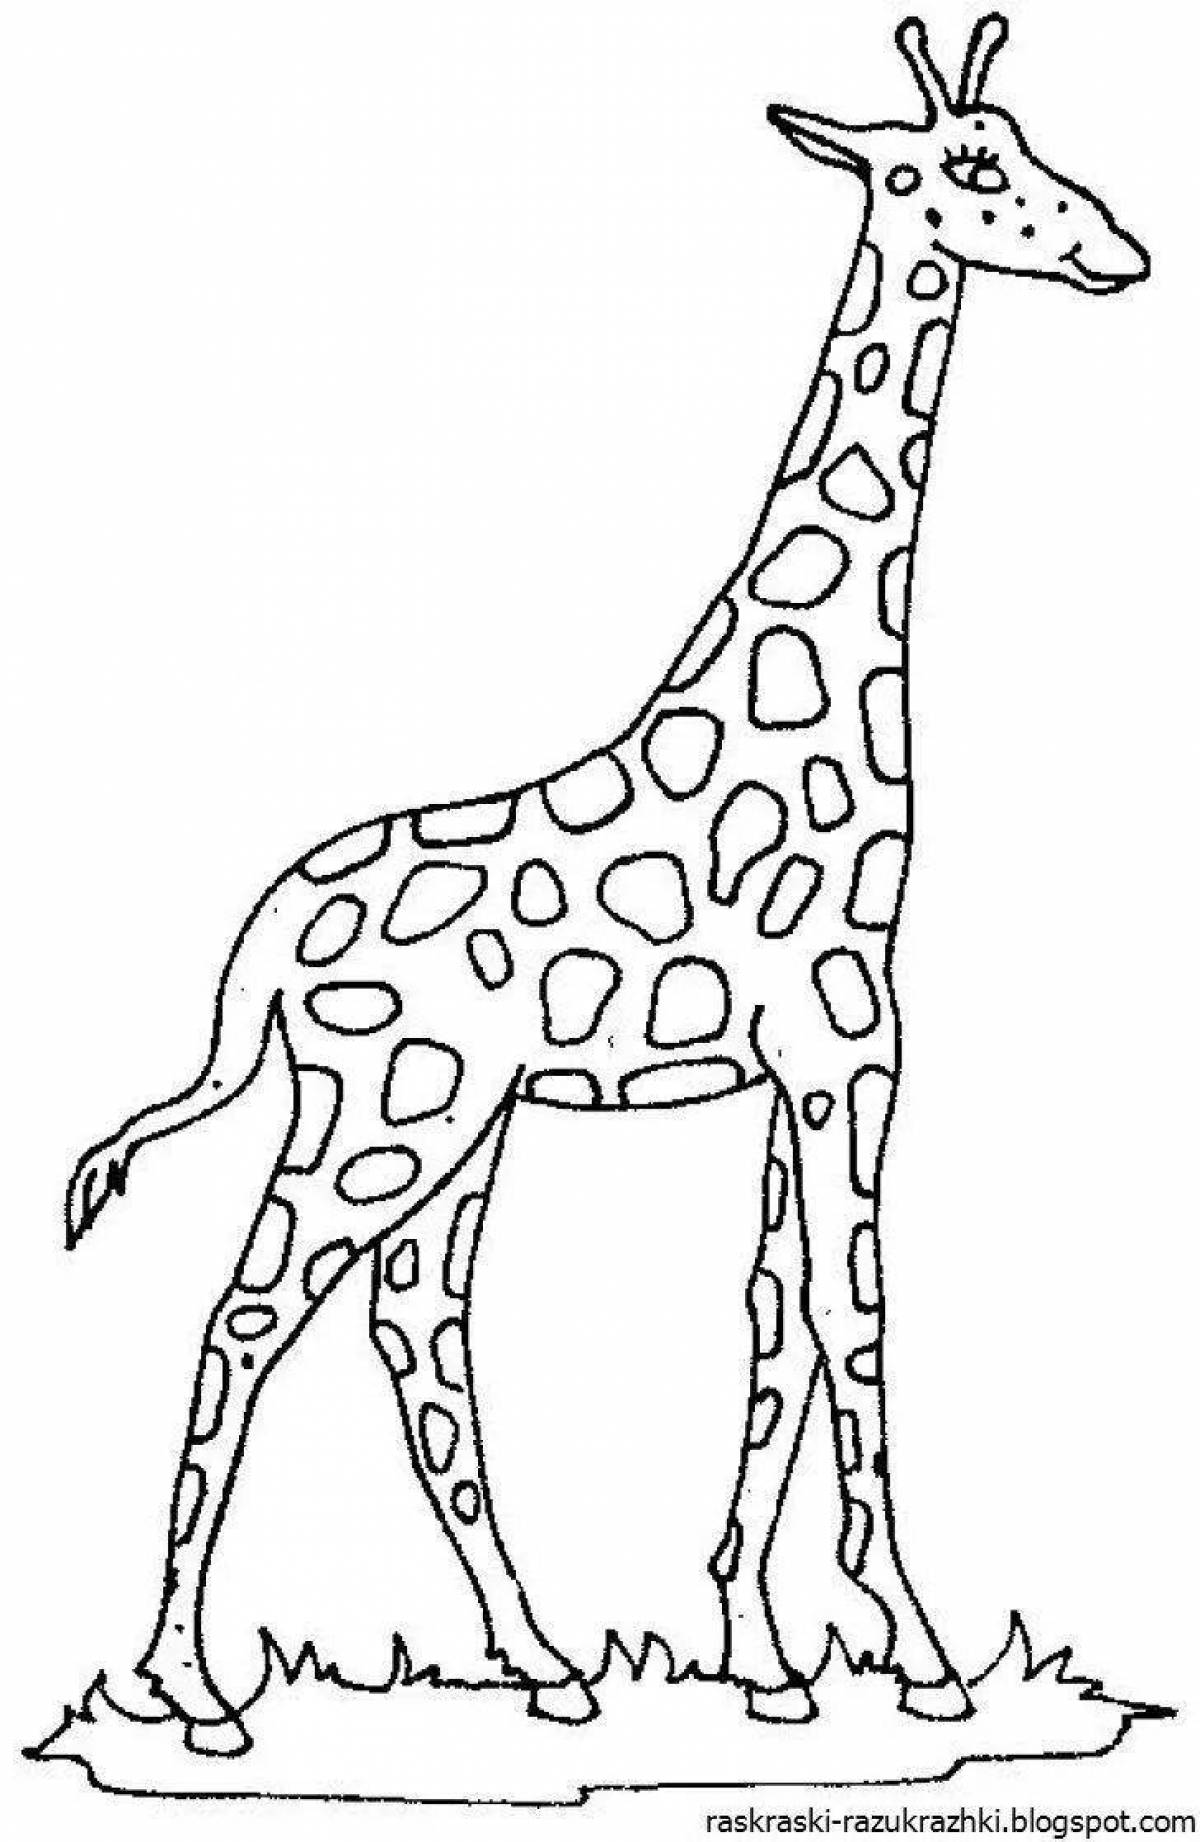 Whimsical drawing of a giraffe for kids